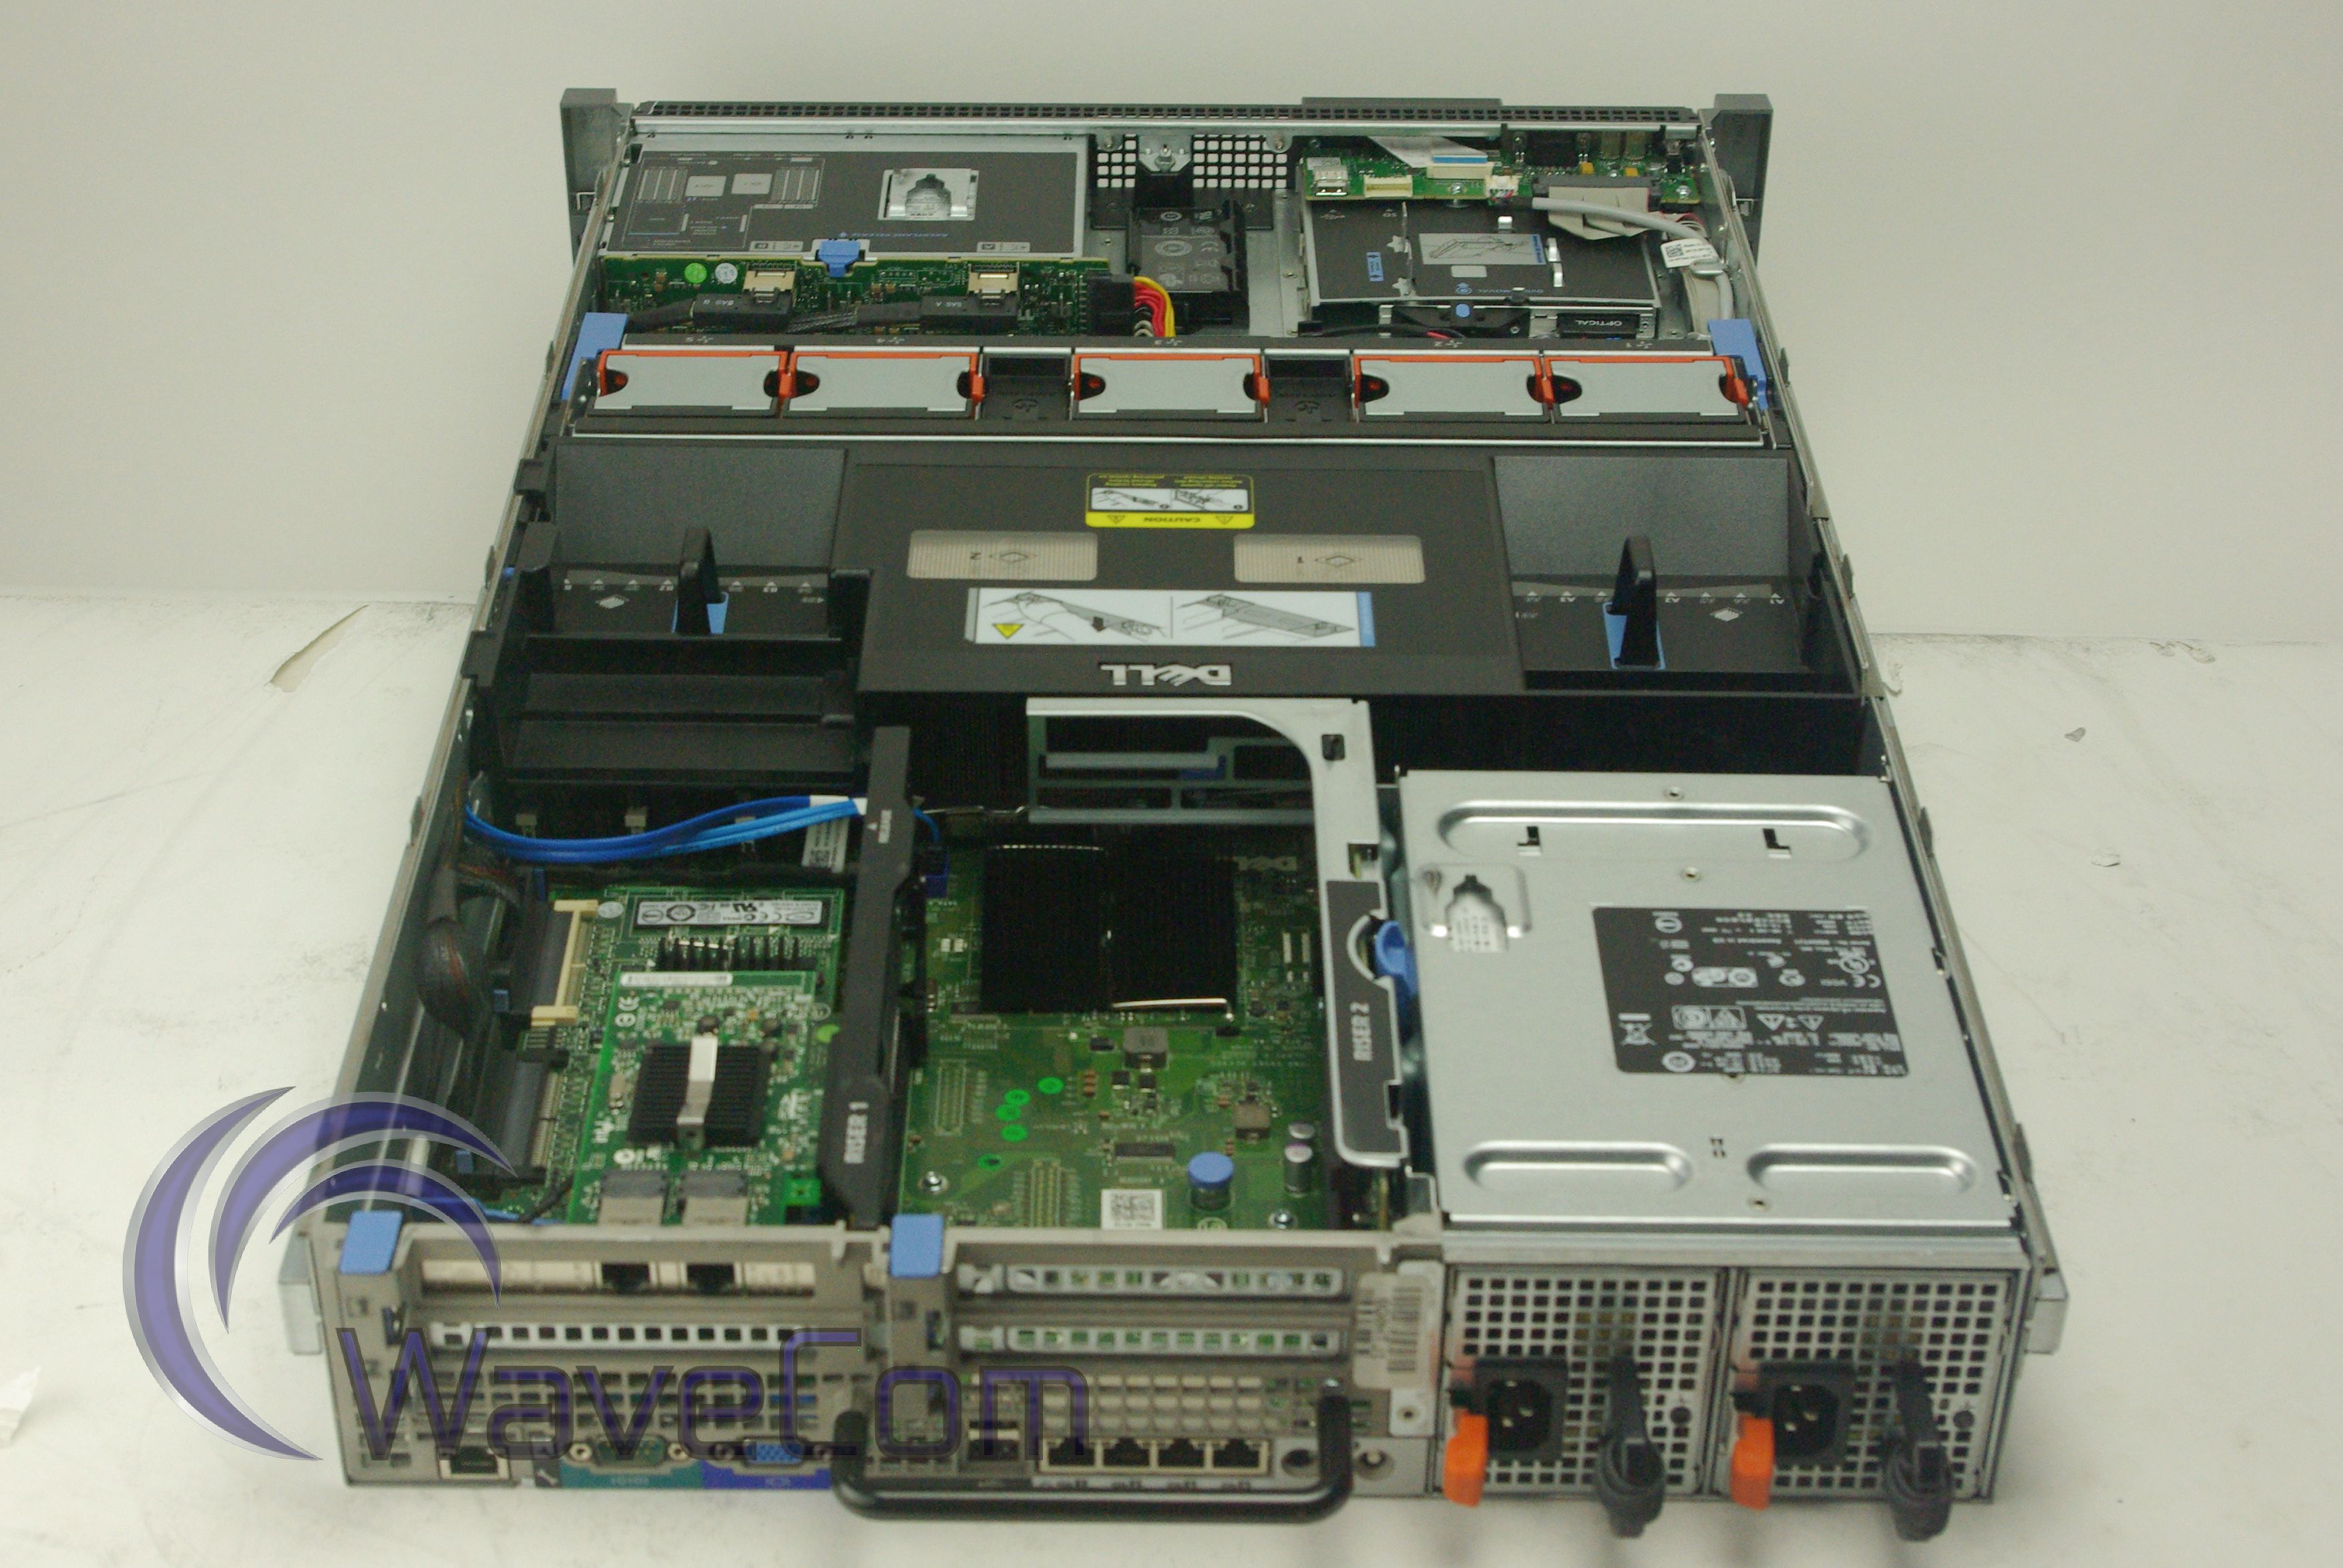 Dell PowerEdge R710 Dual Xeon E5540 2.53GHz 4 Core 48GB RAM 2 x 146GB